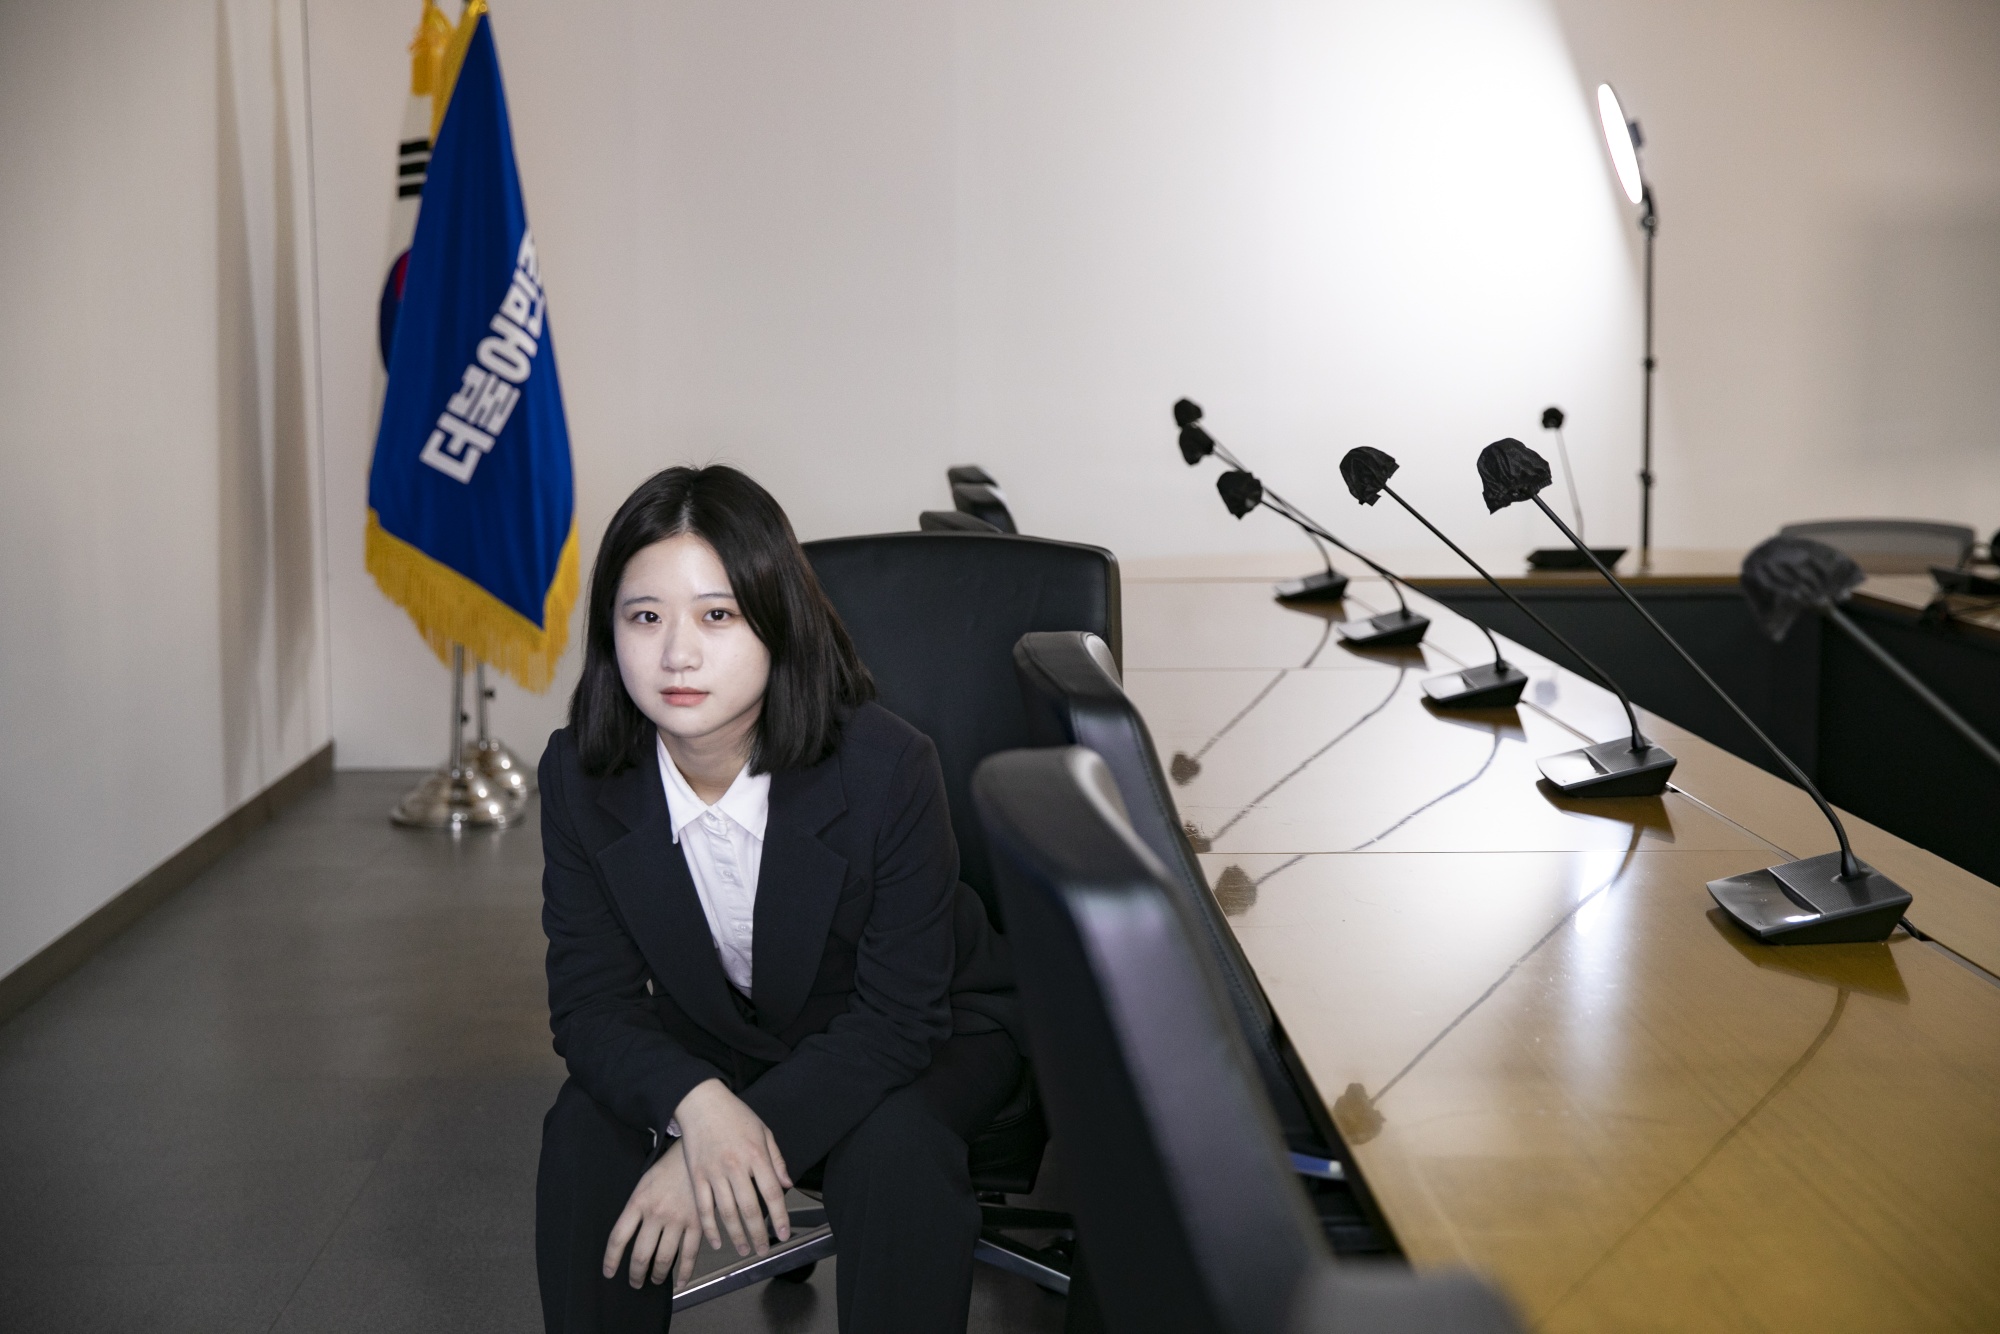 Beegxxxsex - Women's Rights Activist Is Taking on South Korea's President Yoon Suk Yeol  - Bloomberg